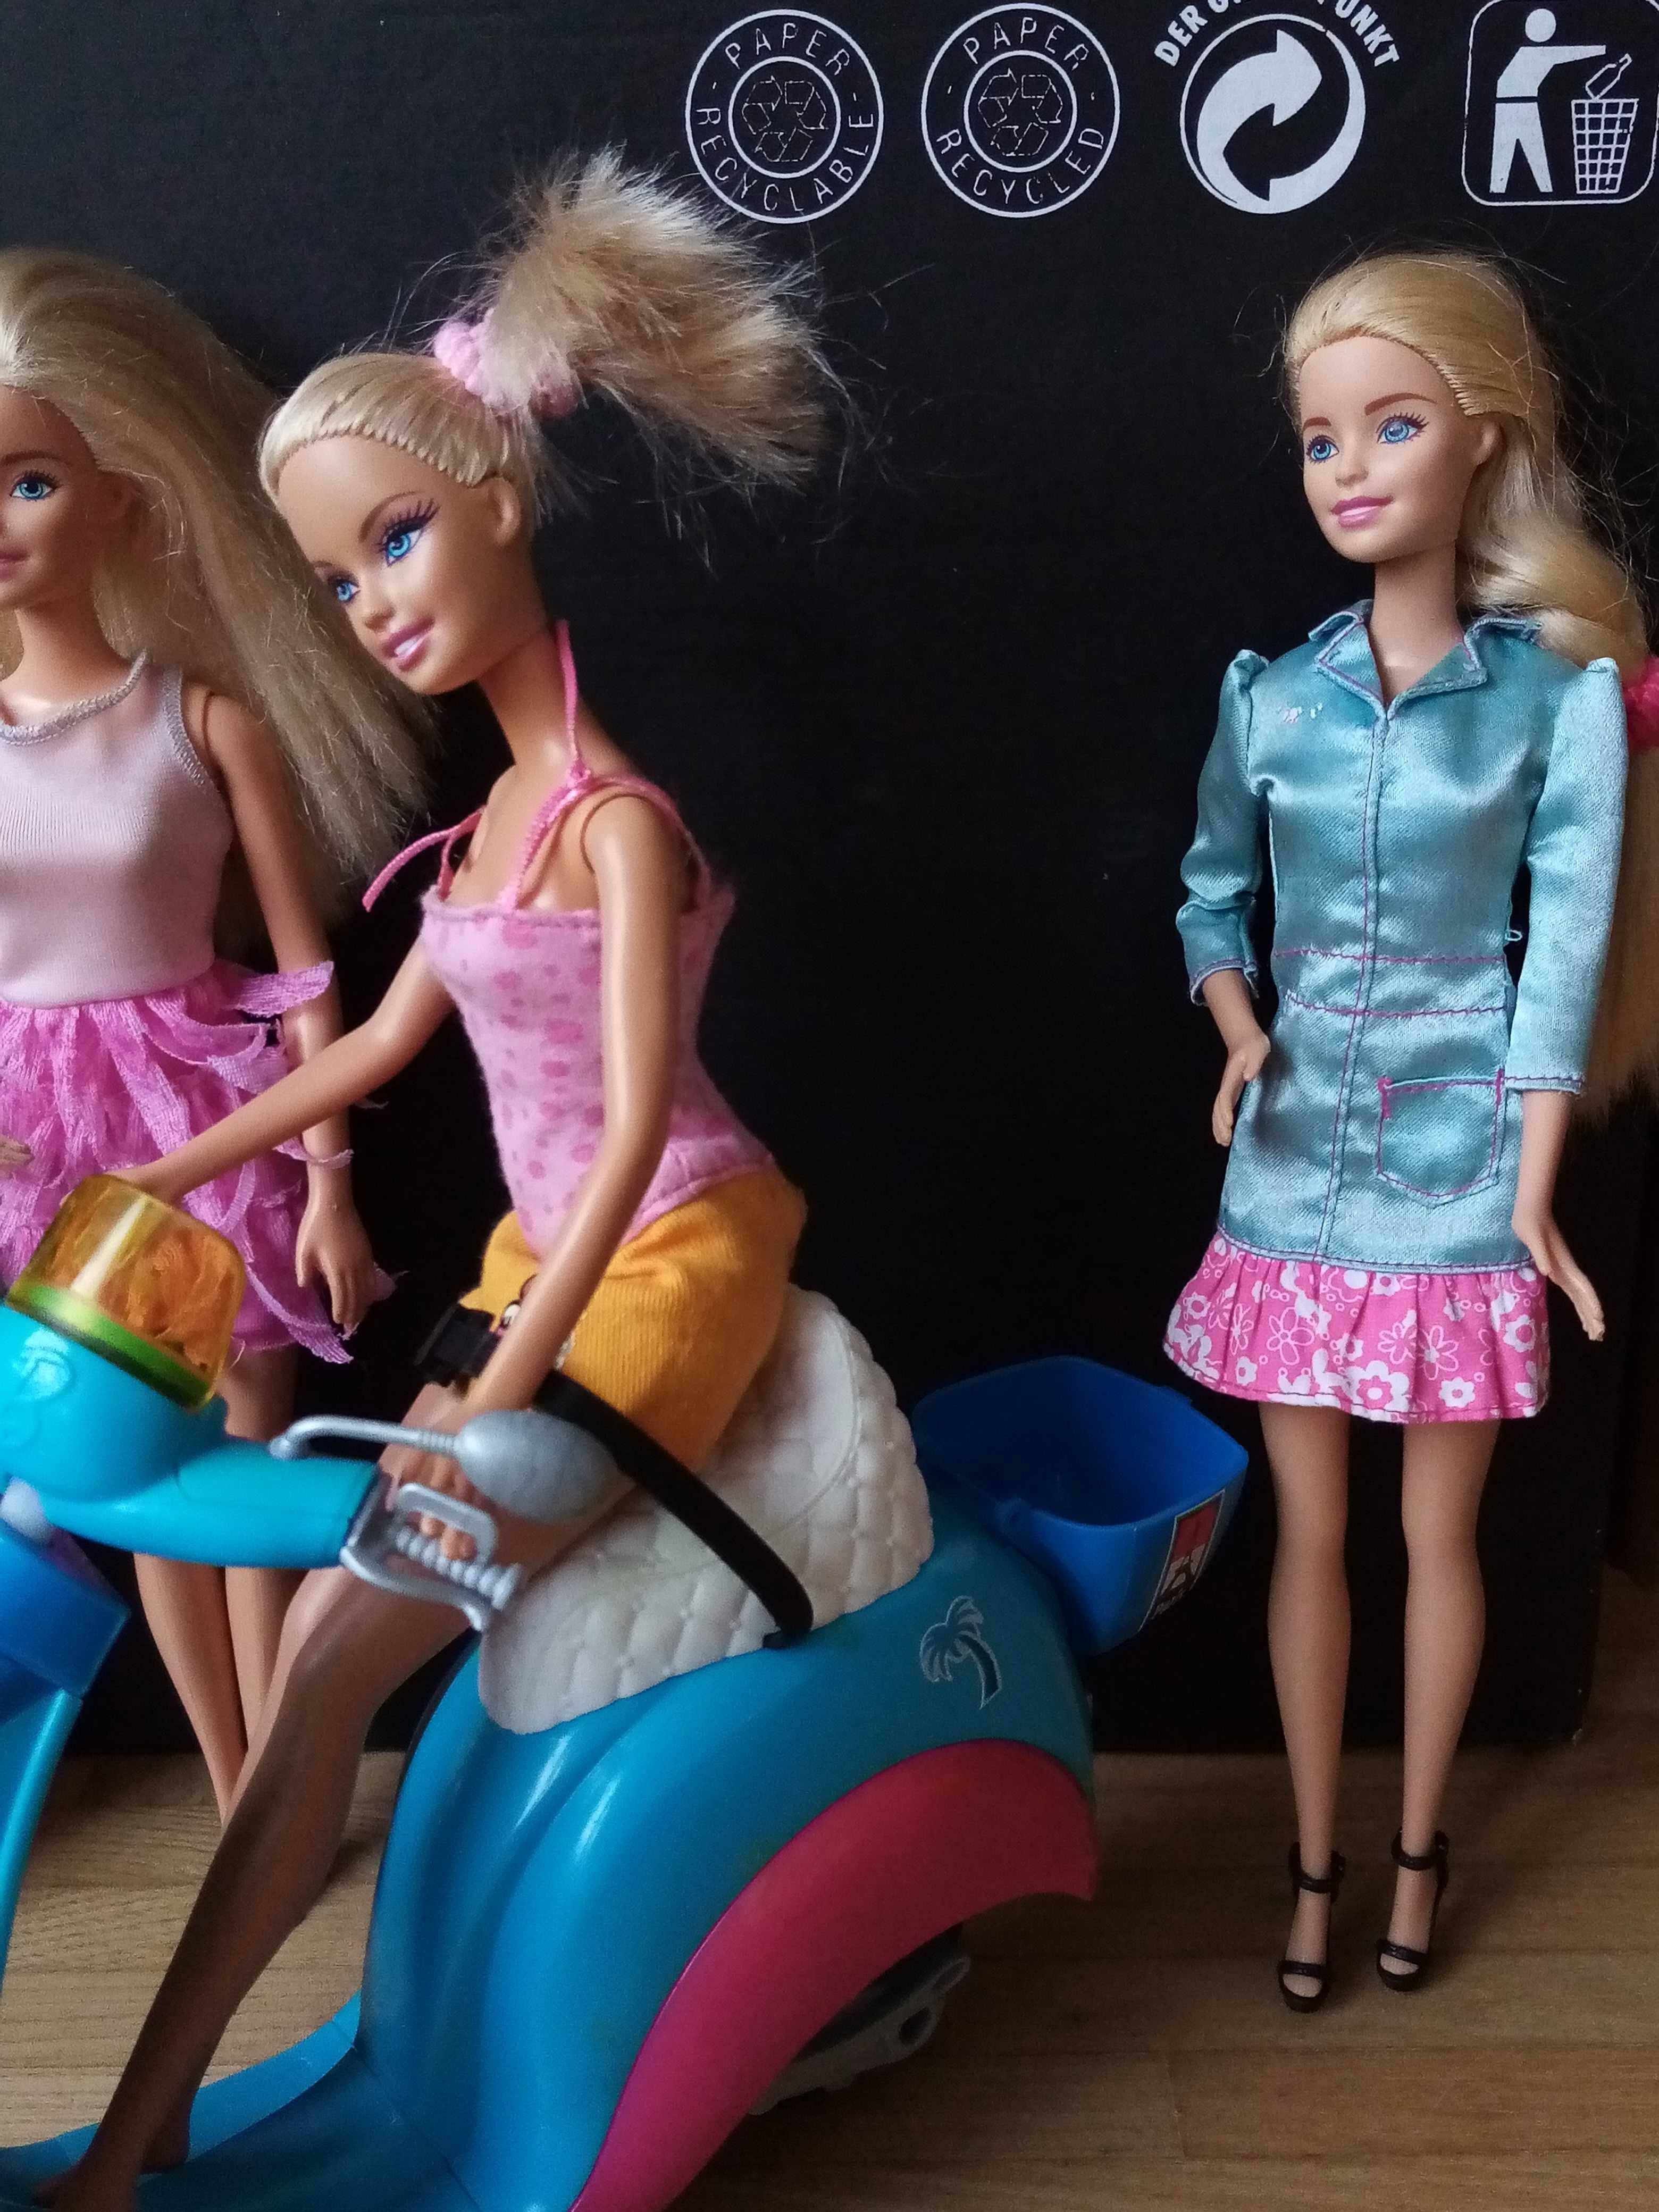 Zestaw lalek Barbie, Simba, i inne, ubranka, motor